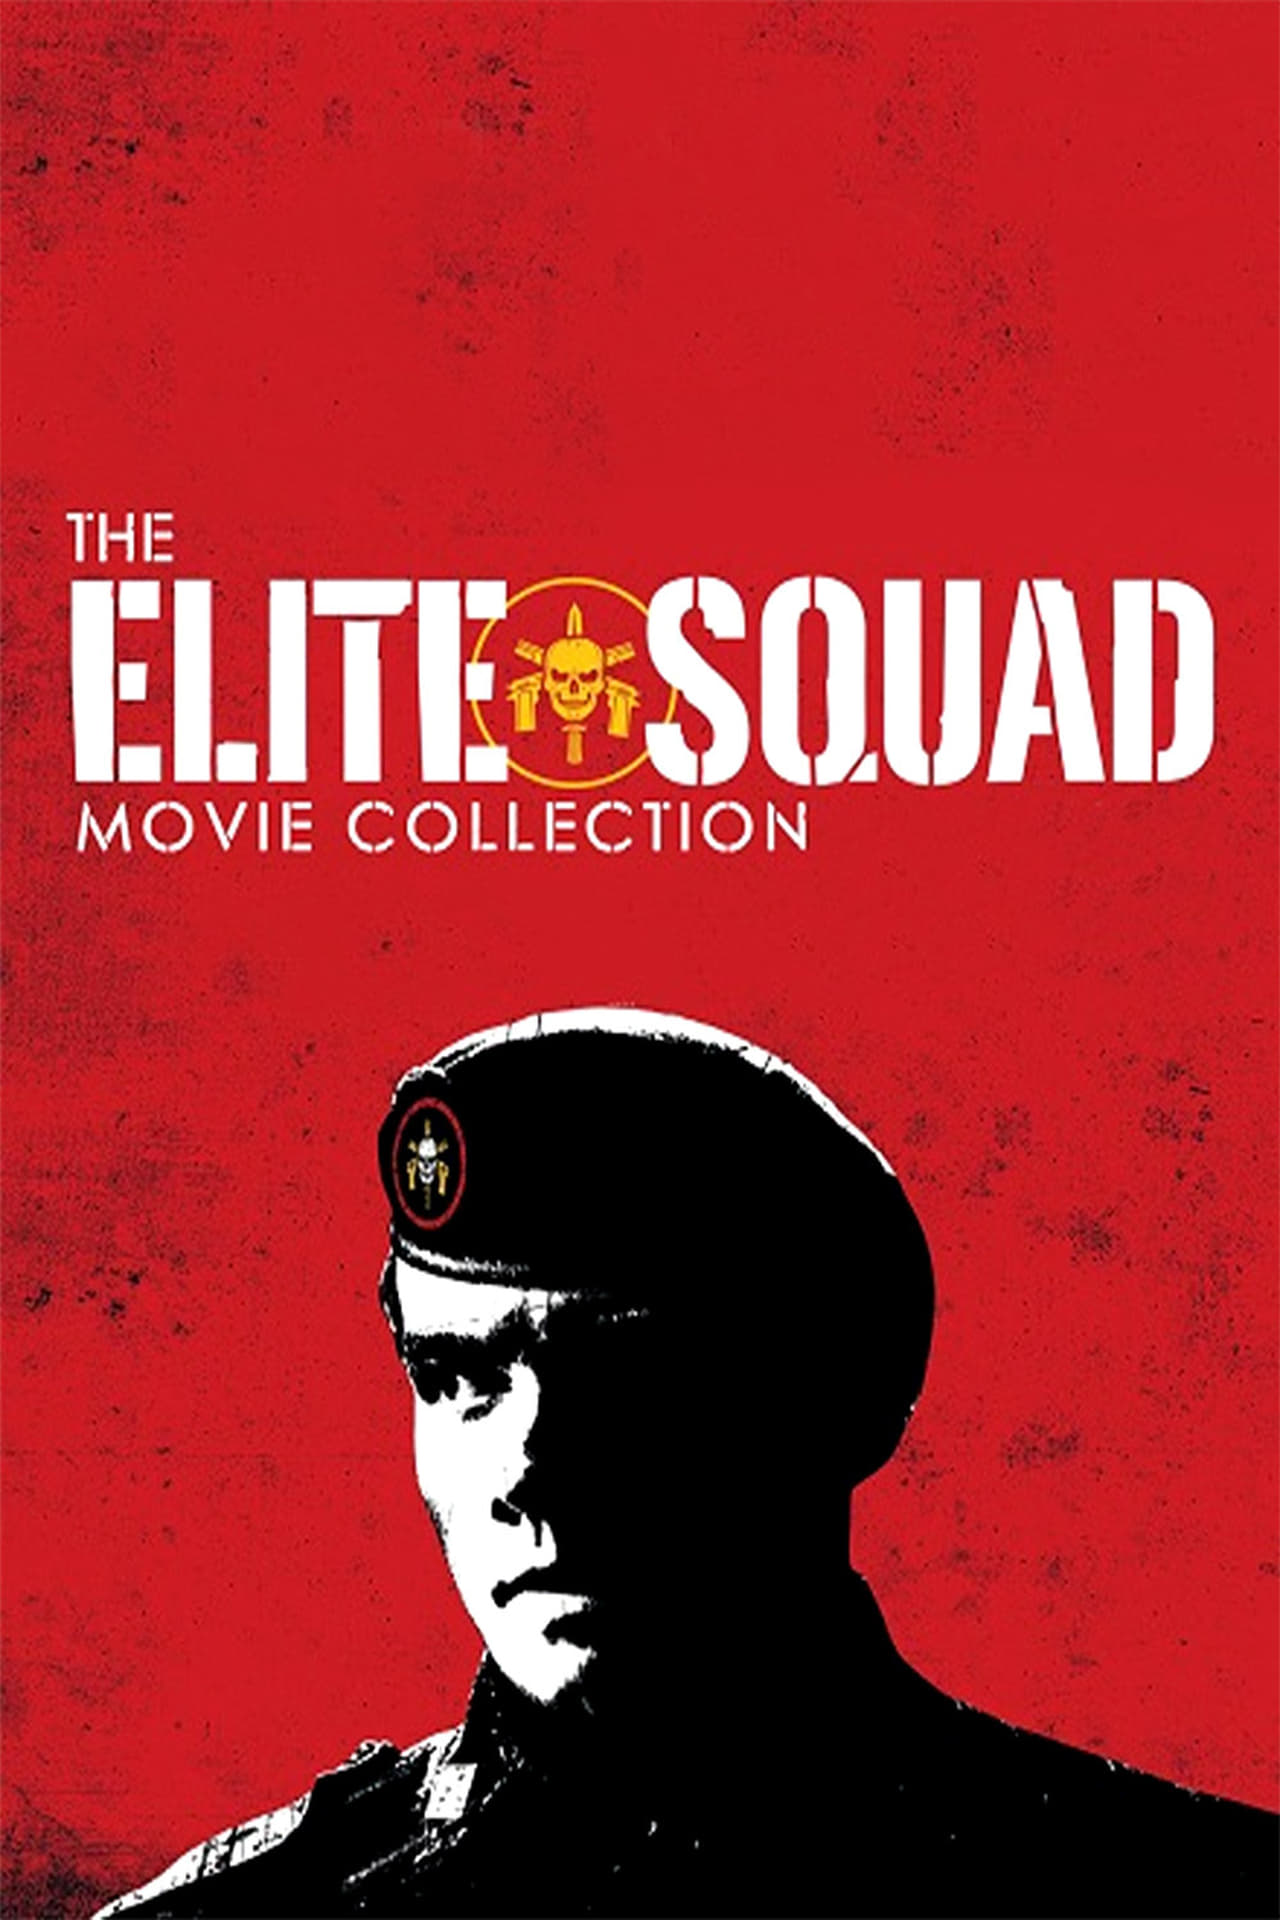 Obrazek ke kolekci filmu a serialu Elite Squad